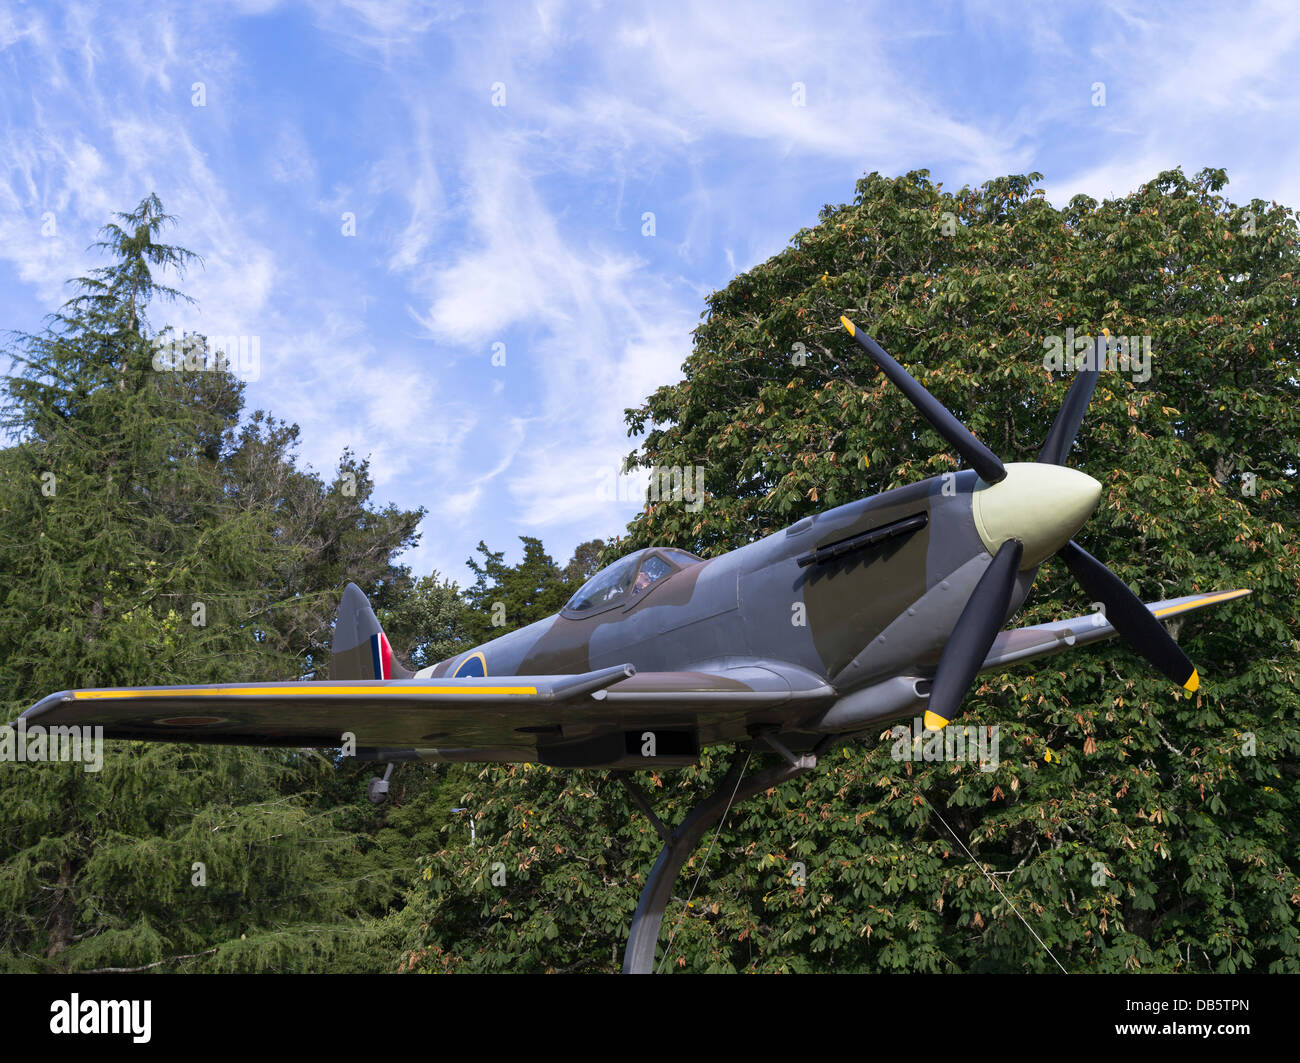 dh Memorial Park Aircraft HAMILTON NUOVA ZELANDA NZ Spitfire mk xvi replica aereo ww2 aereo da combattimento mondiale guerra due aerei Foto Stock